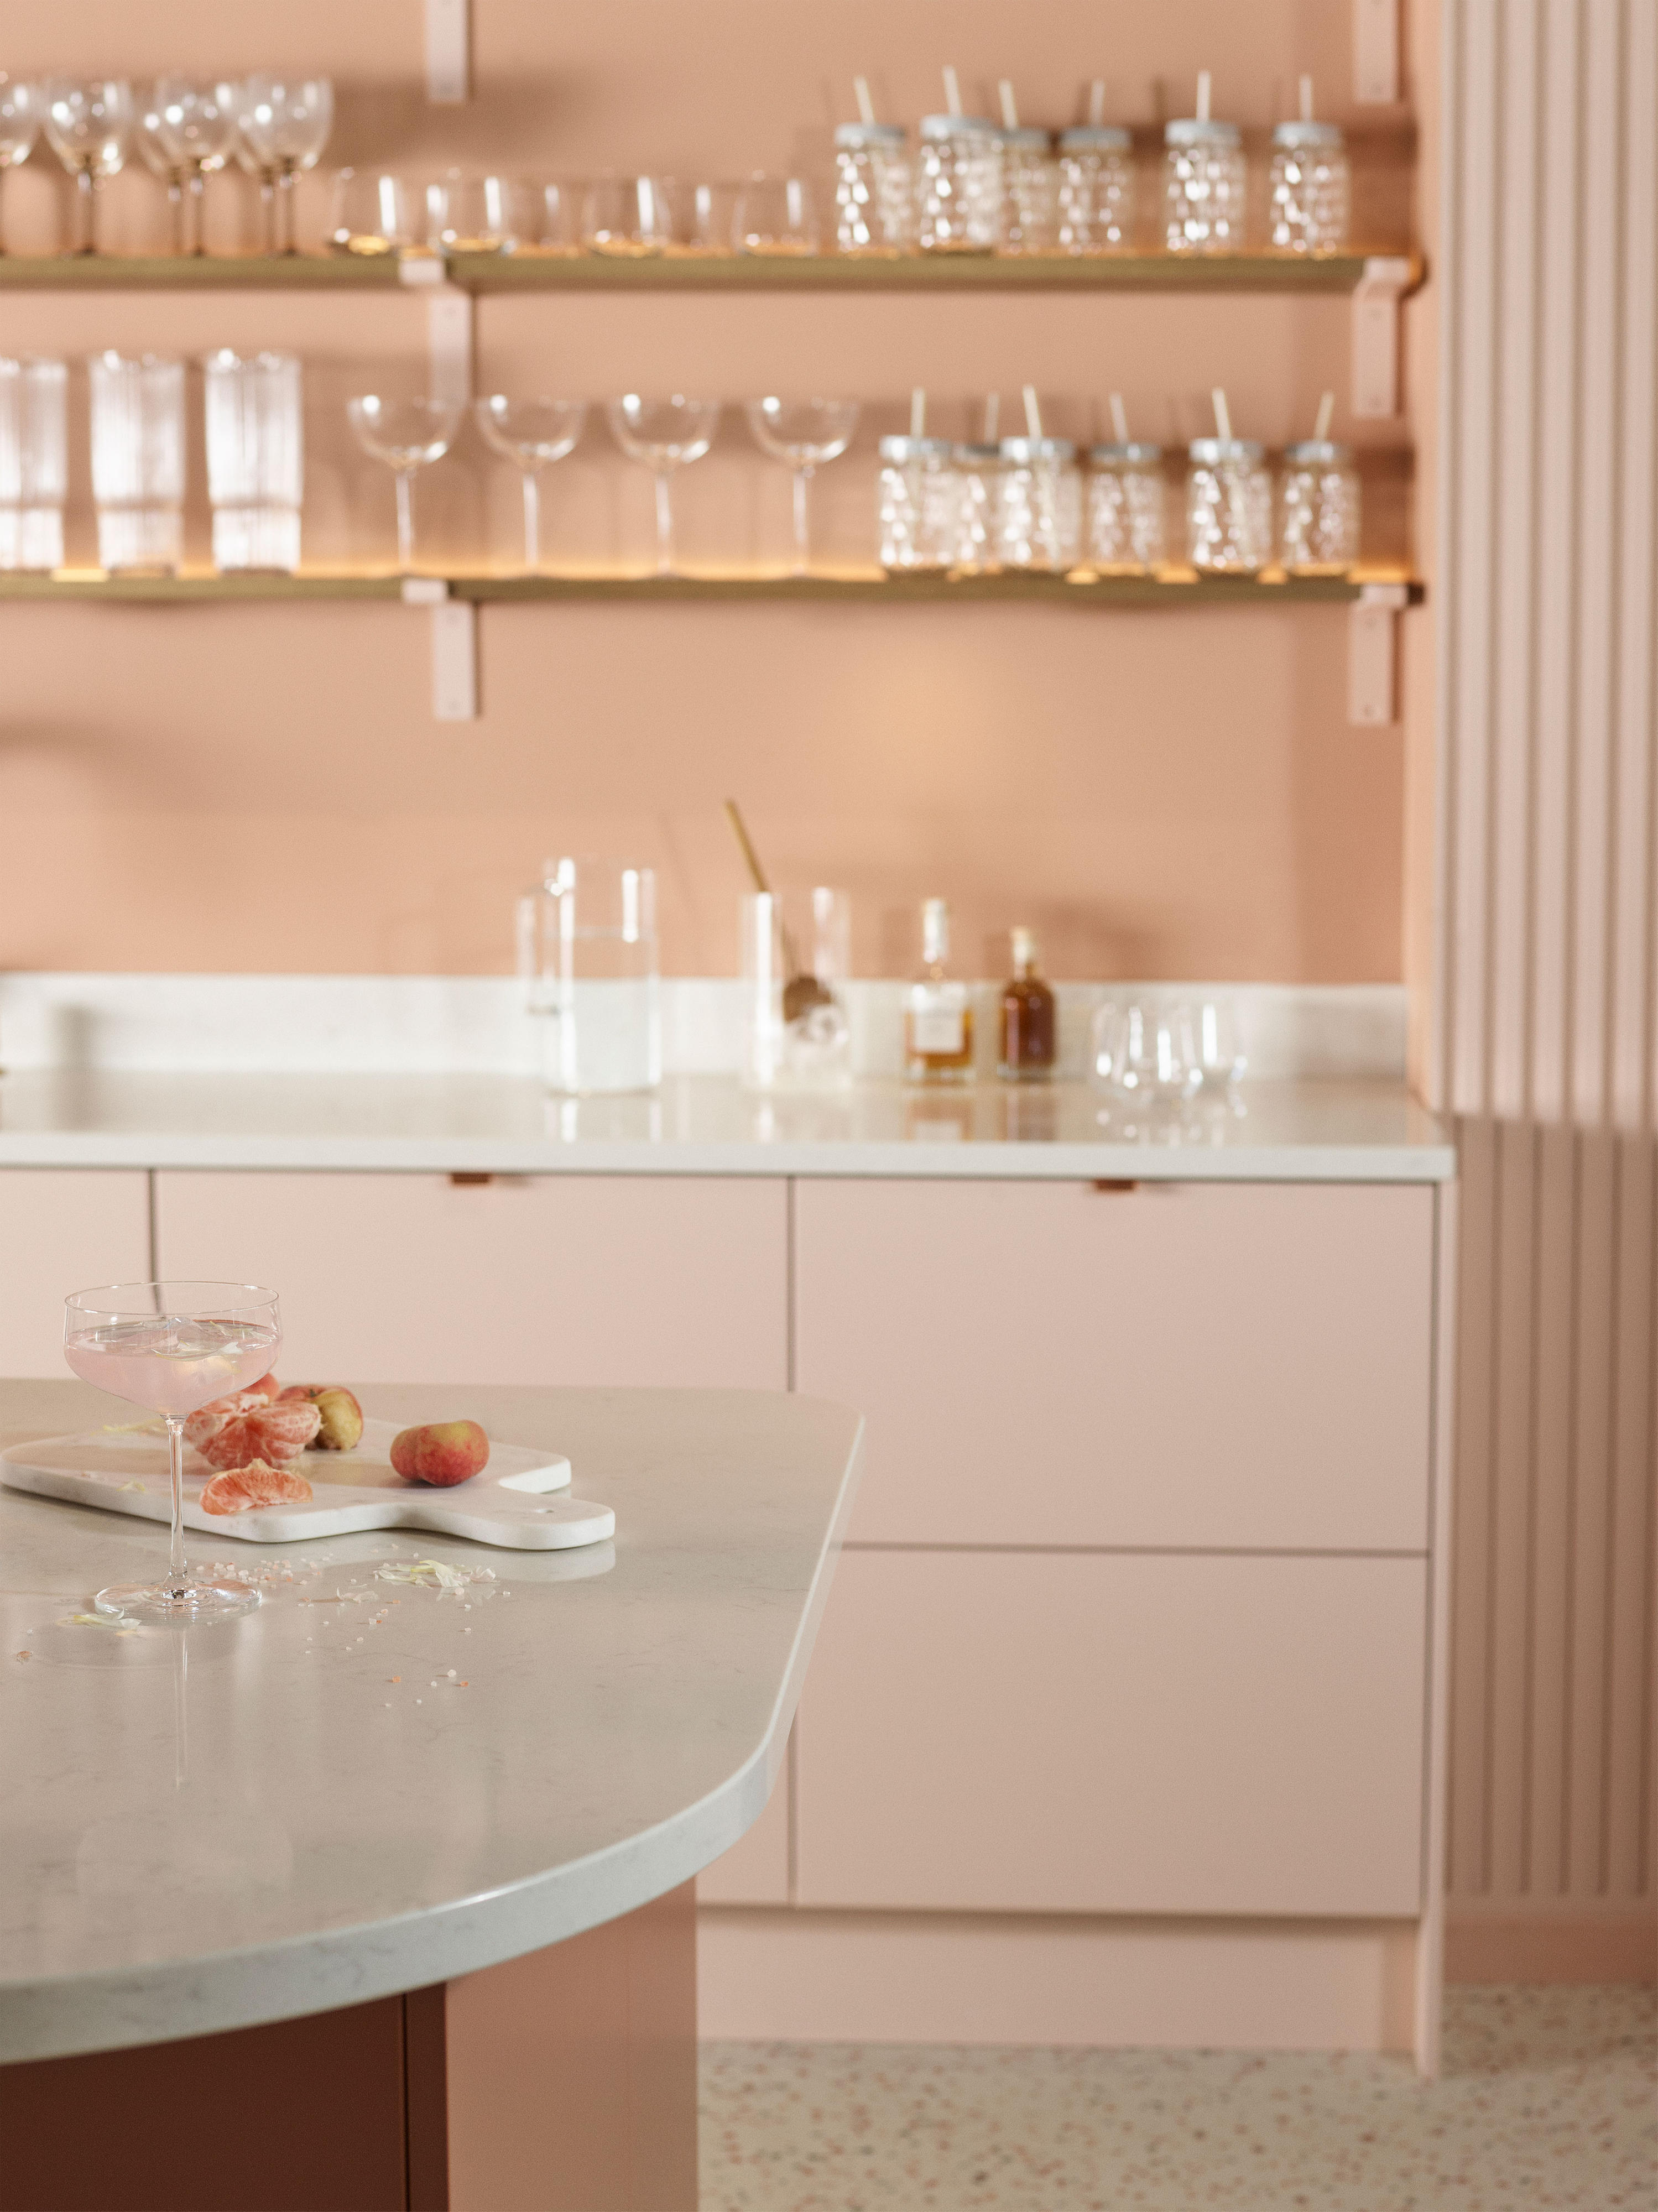 Epoq Trend Blush & Trend Sienna kitchen with shelfes of glasses